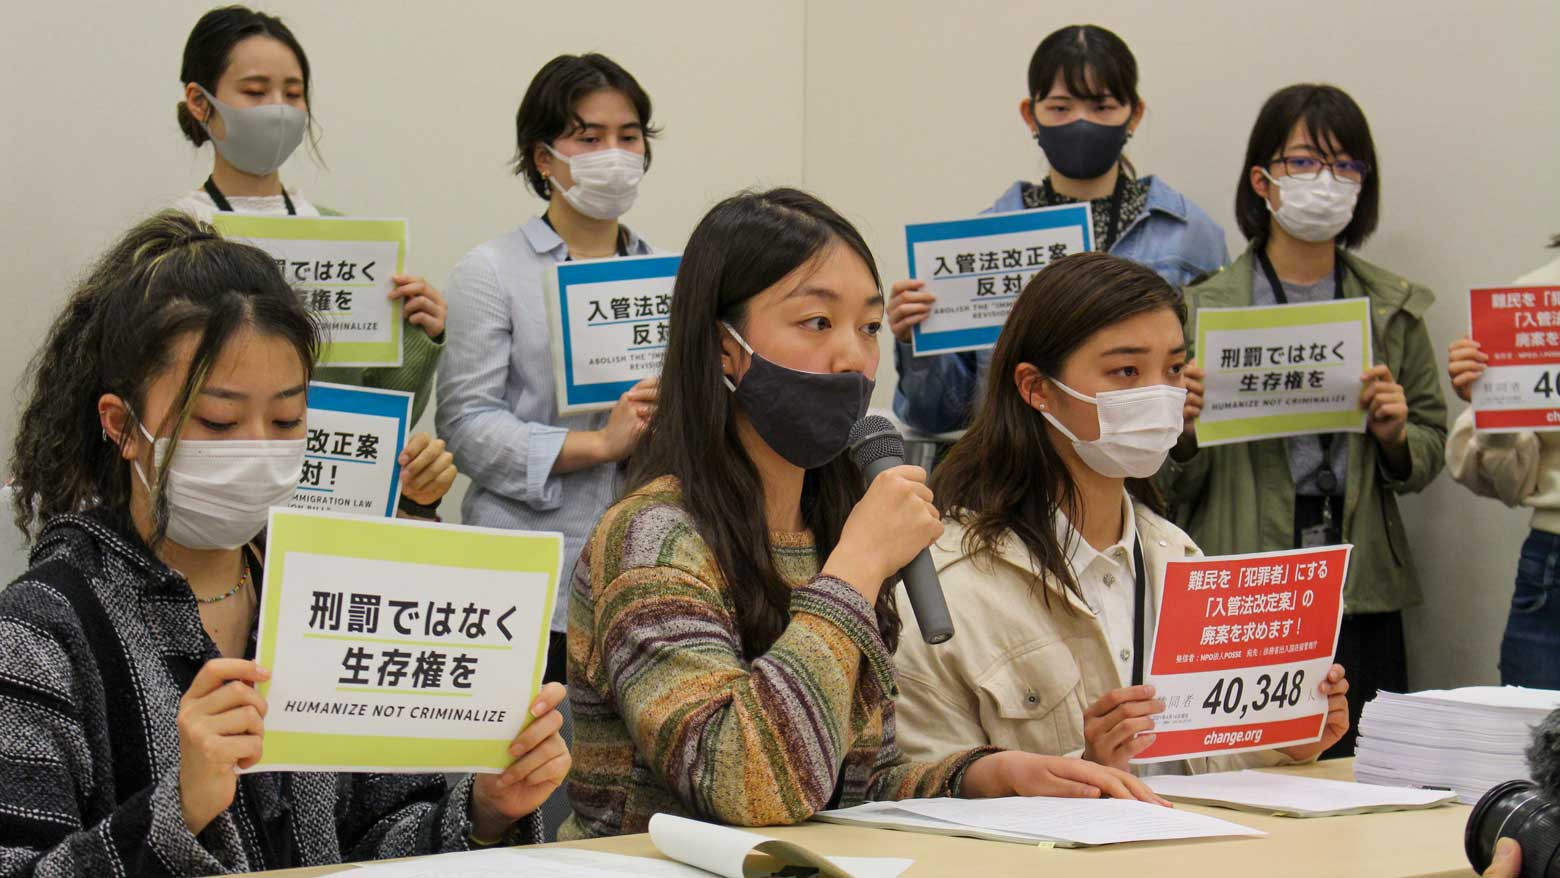 Protest campaign targets Japan immigration law reform